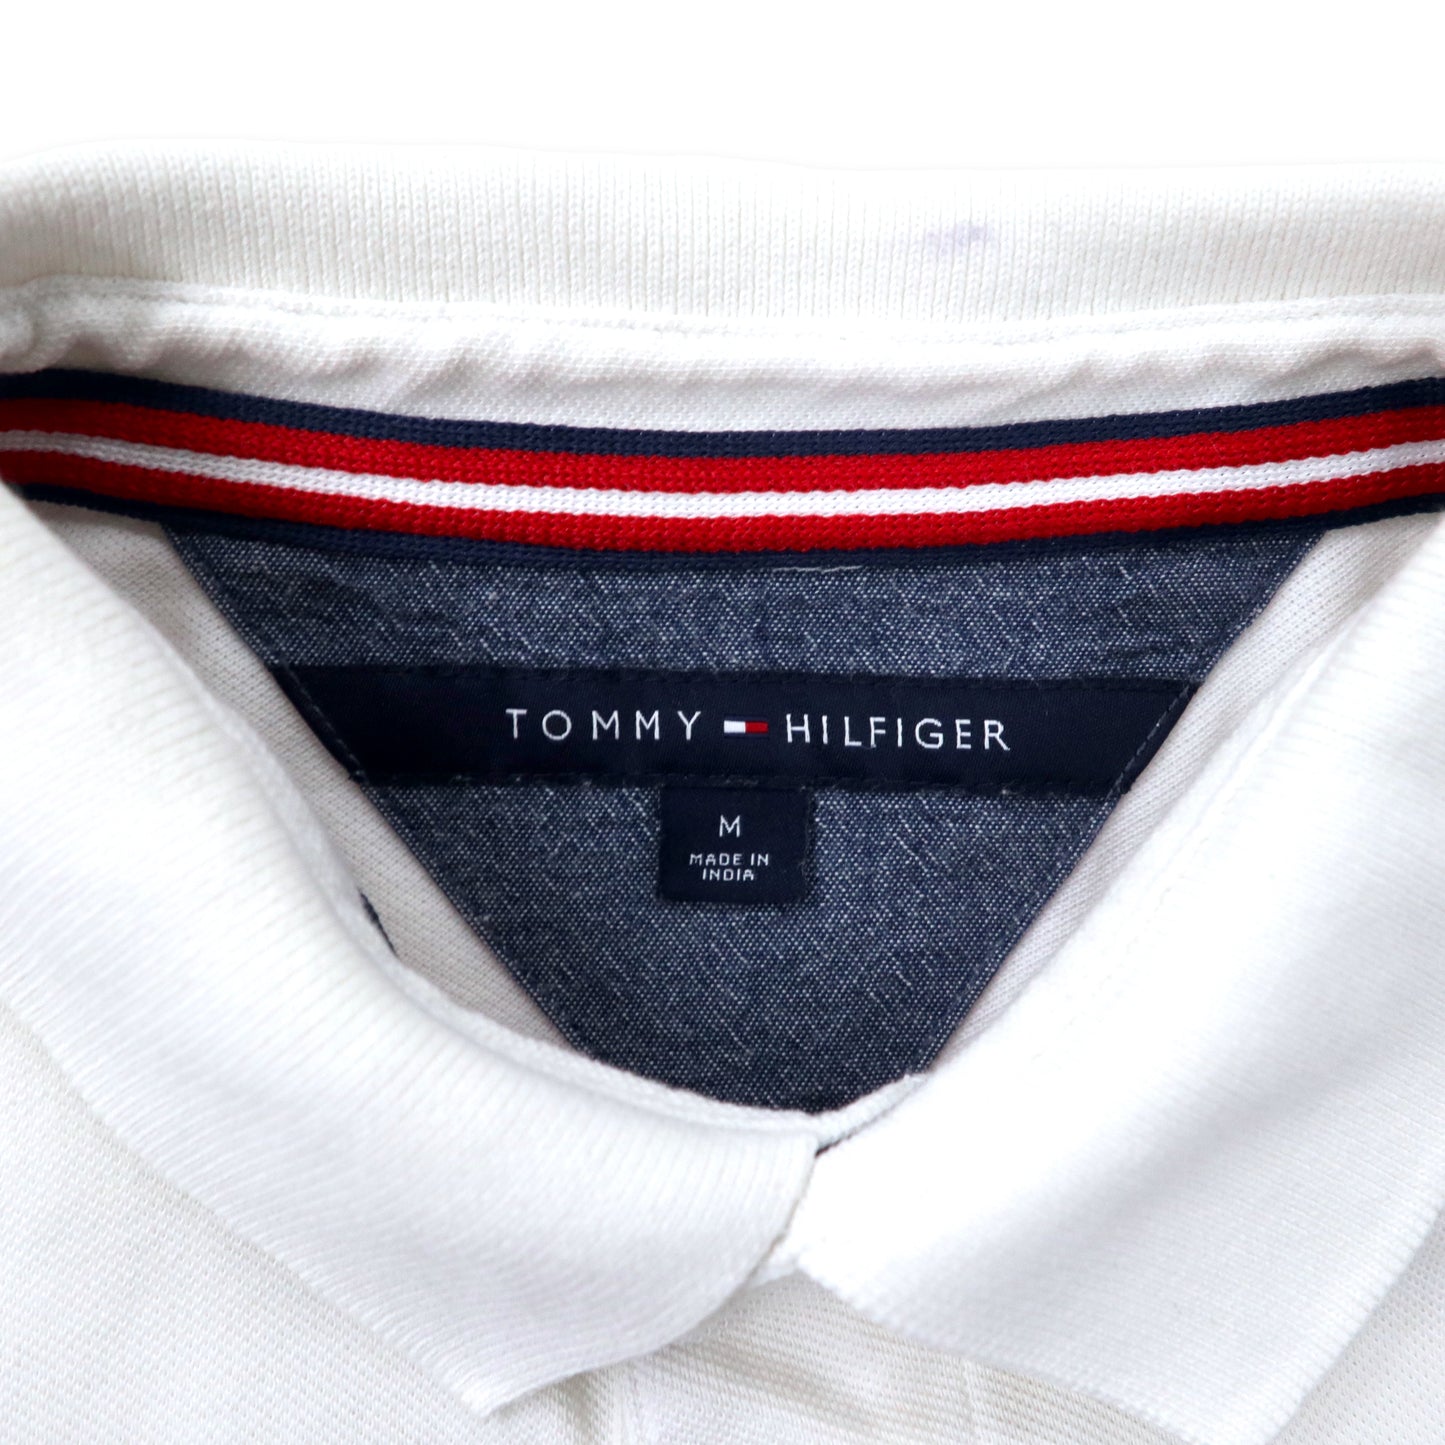 TOMMY HILFIGER フラッグロゴ ポロシャツ M ホワイト コットン